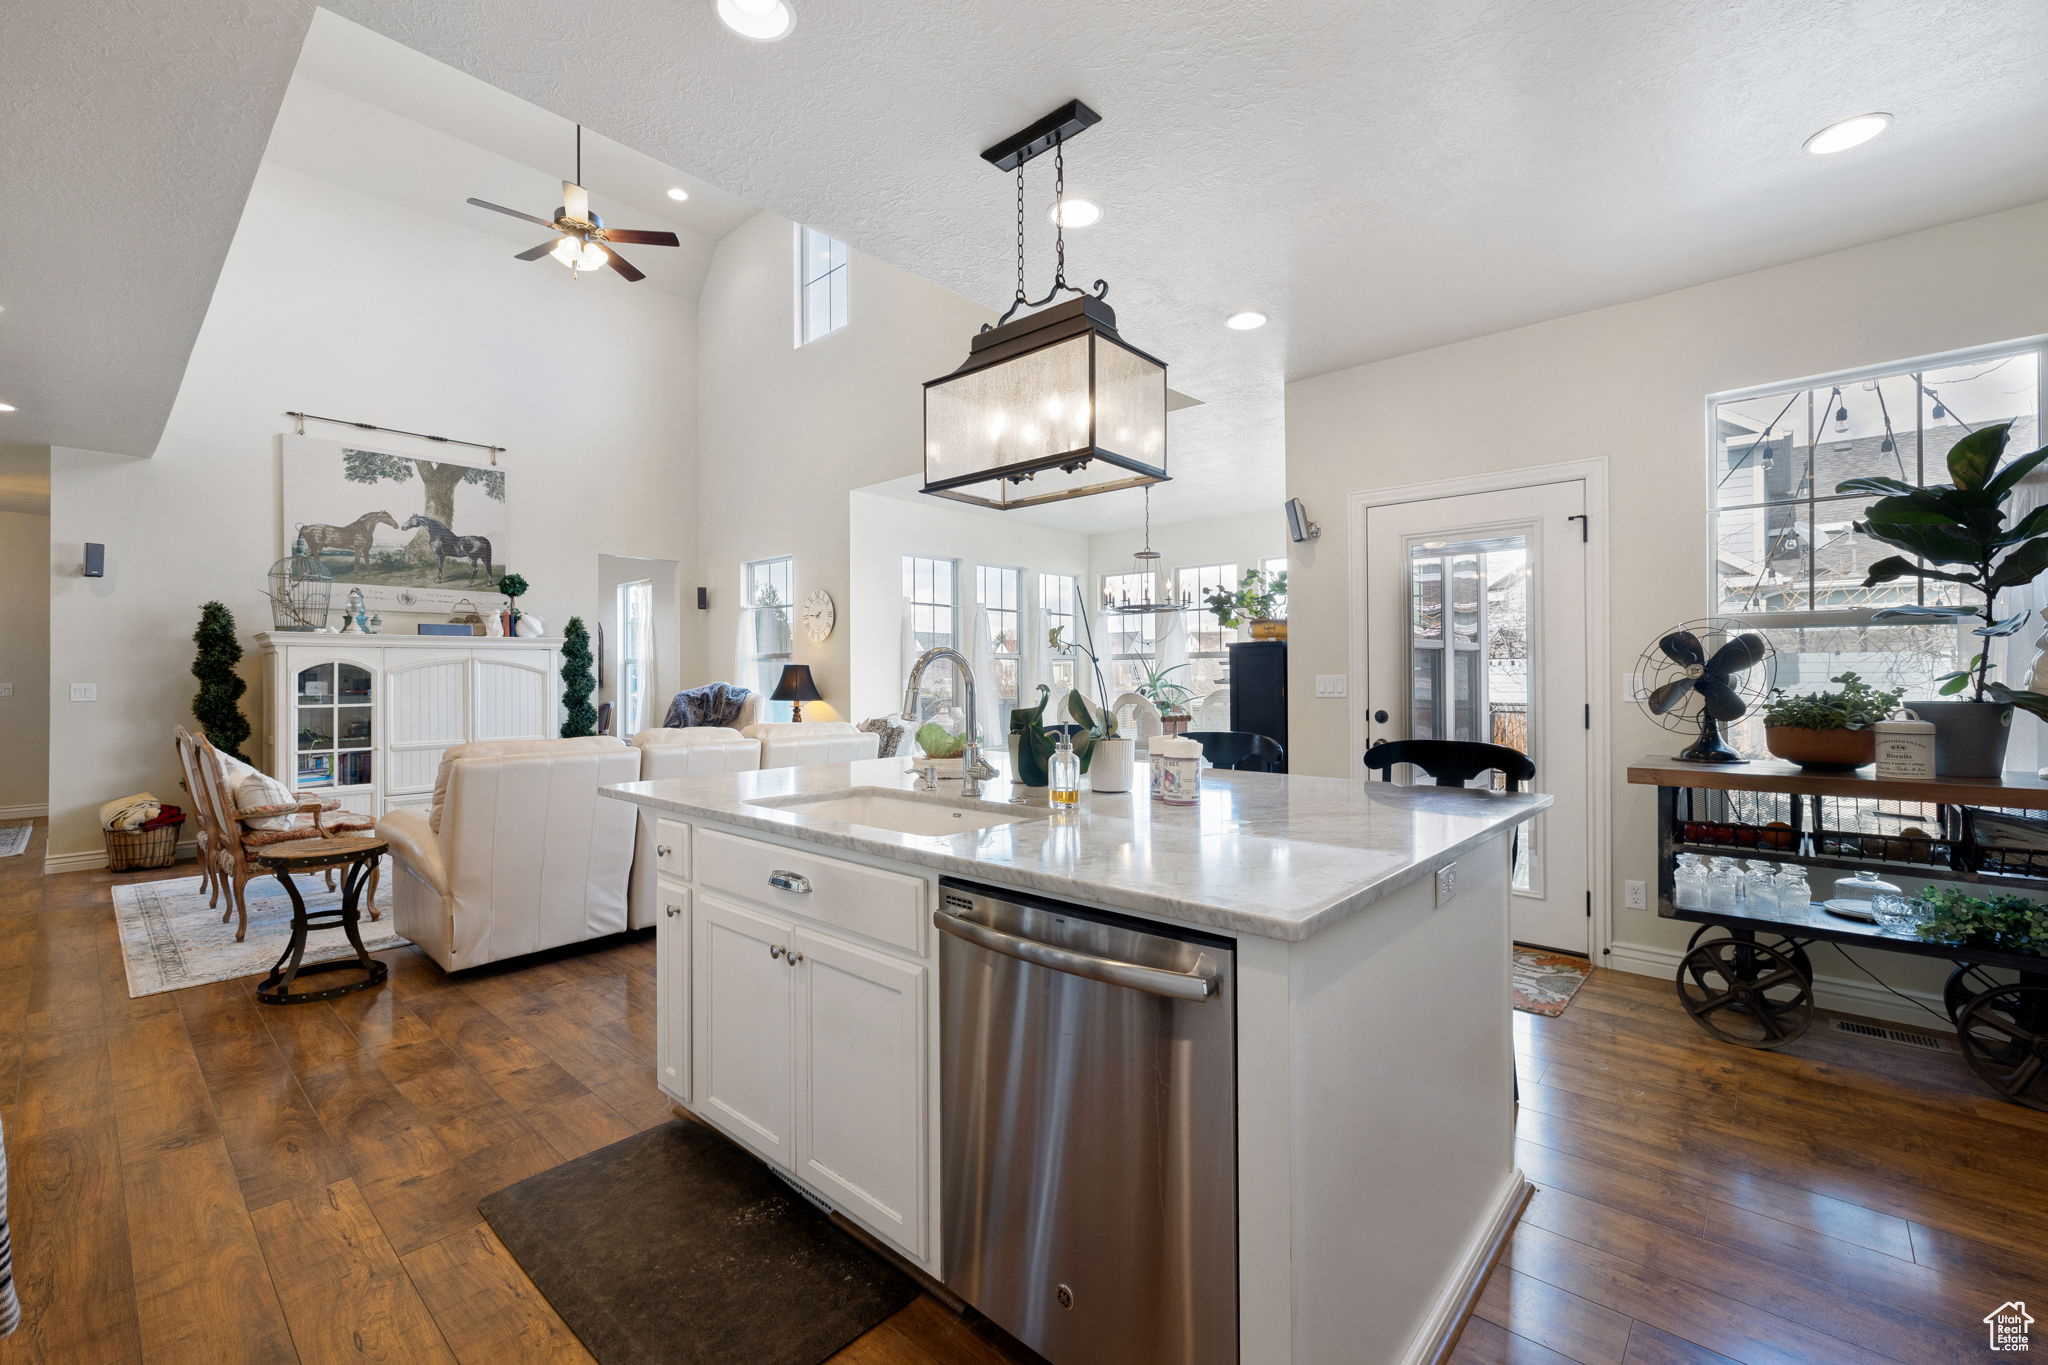 Kitchen with hanging light fixtures, dark hardwood / wood-style flooring, dishwasher, and sink